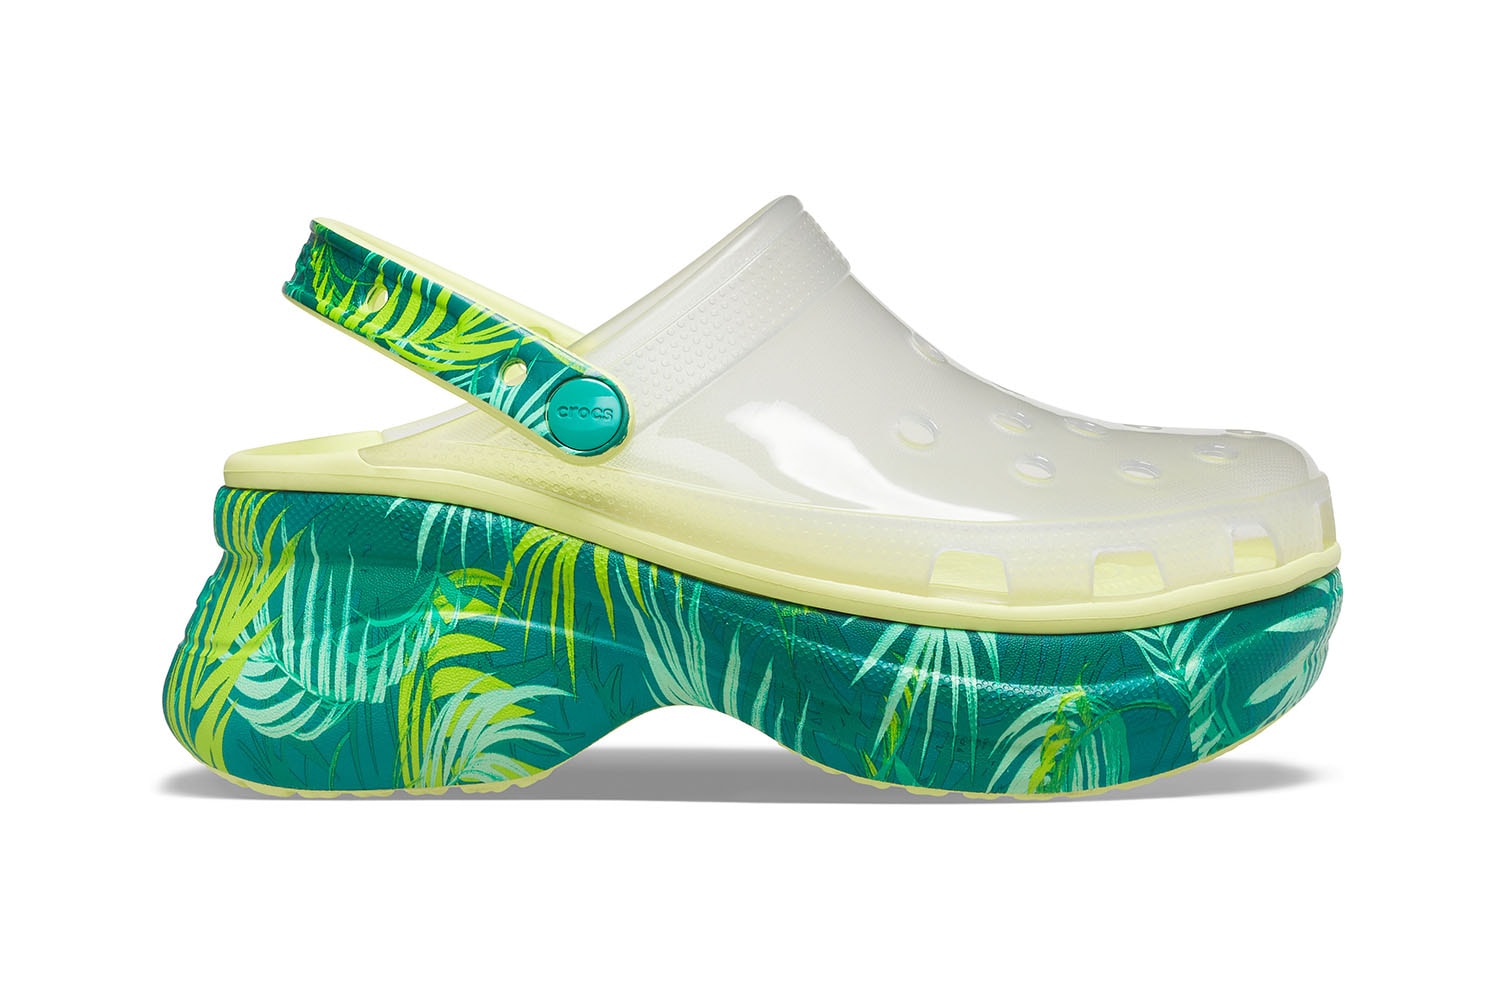 Crocs Release Tropical Collection Summer 2021 Clogs Sandals